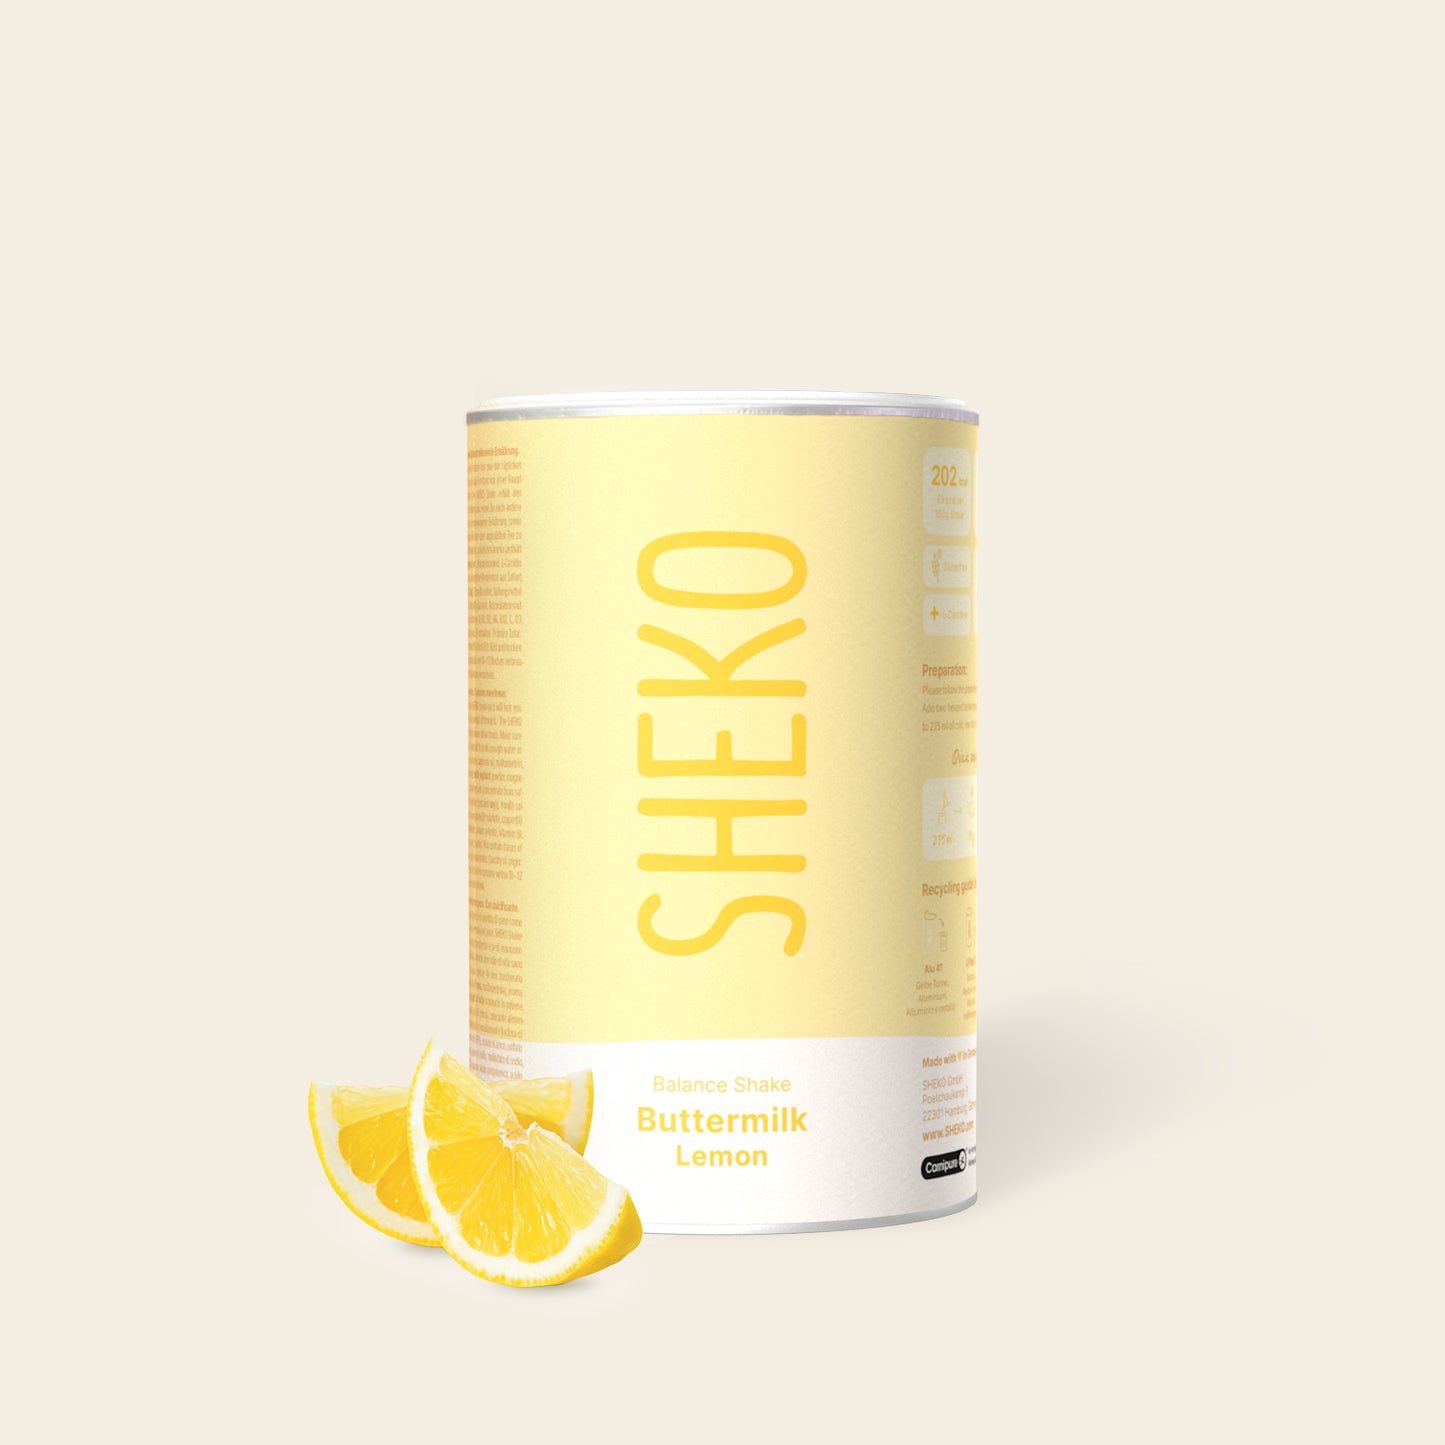 Shakemahlzeit Buttermilk Lemon (360g)